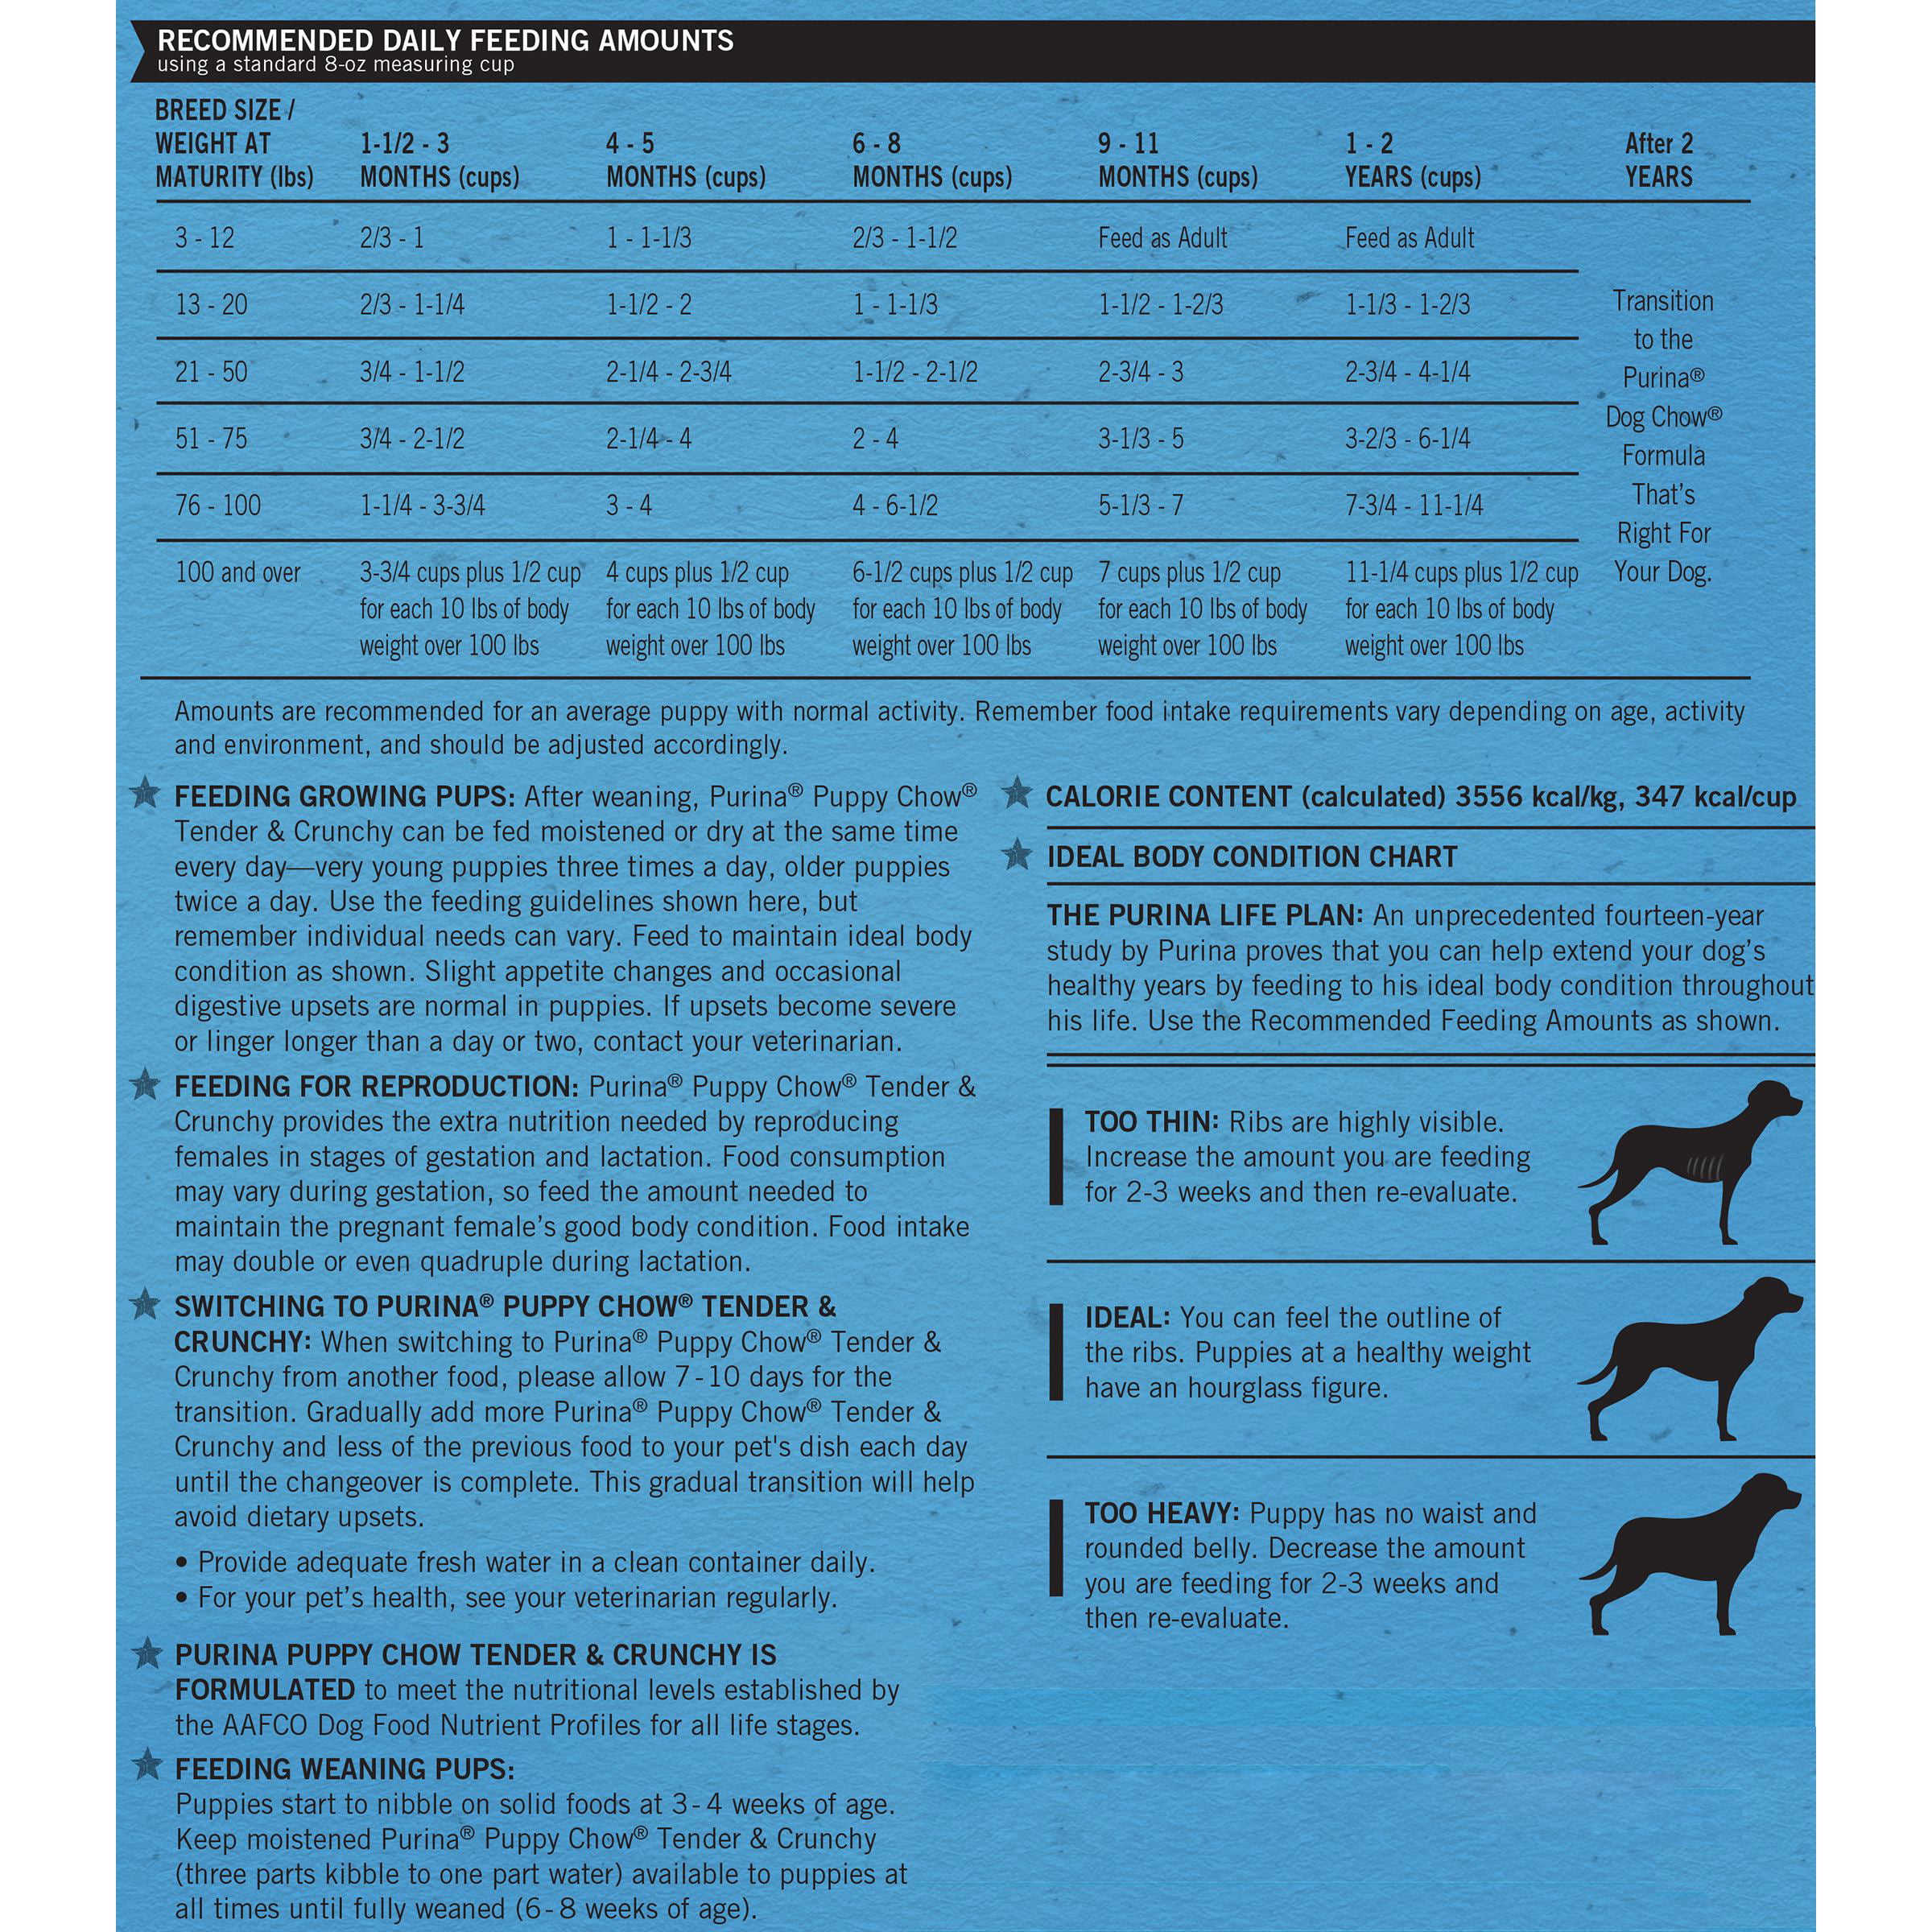 Beneful Dog Food Feeding Chart